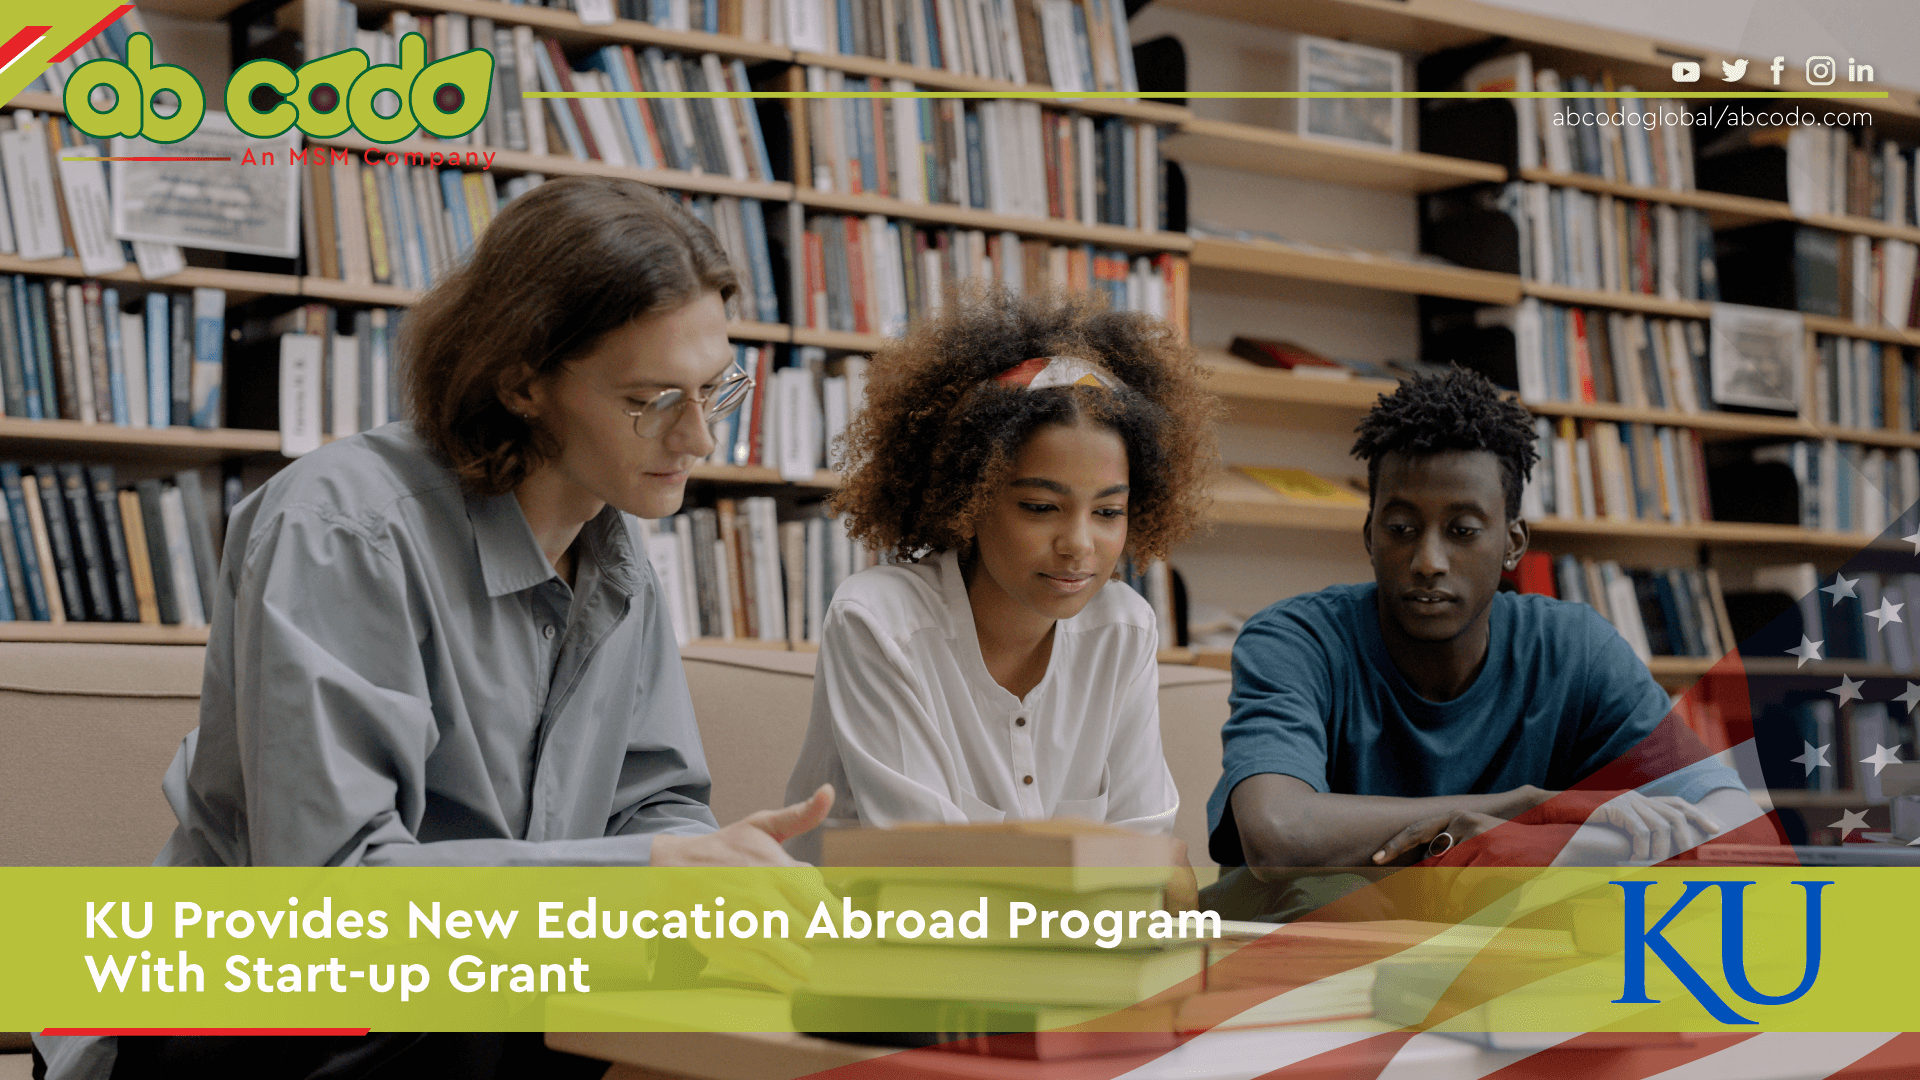 KU Provides New Education Abroad Program With Start-up Grant